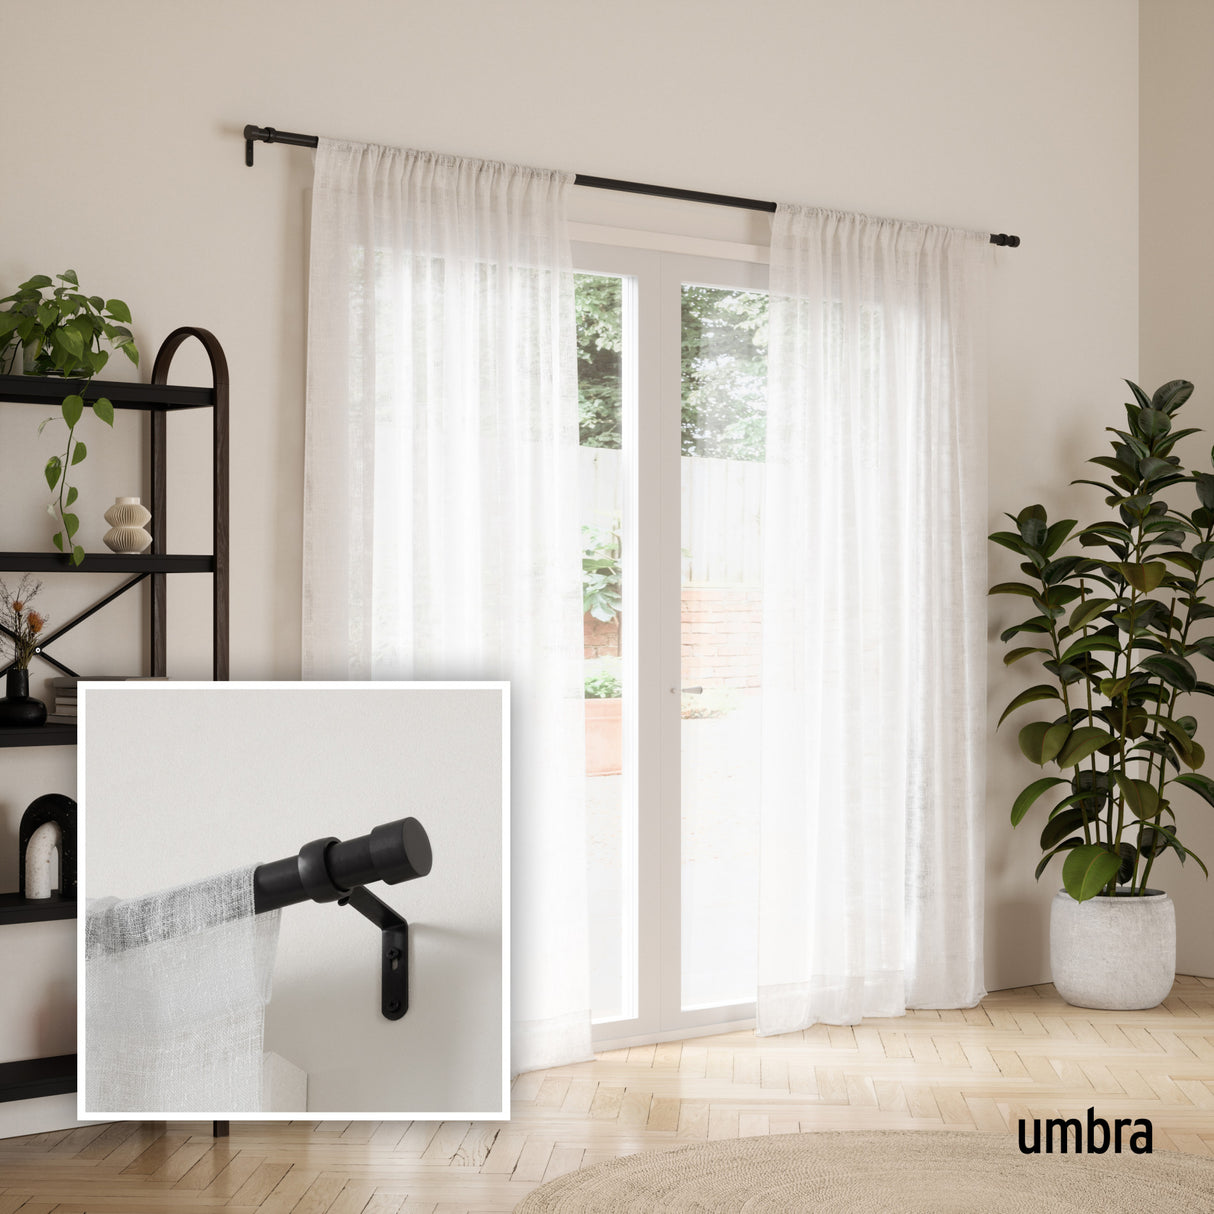 Single Curtain Rods | color: Brushed-Black | size: 36-66" (91-168 cm) | diameter: 1" (2.5 cm)